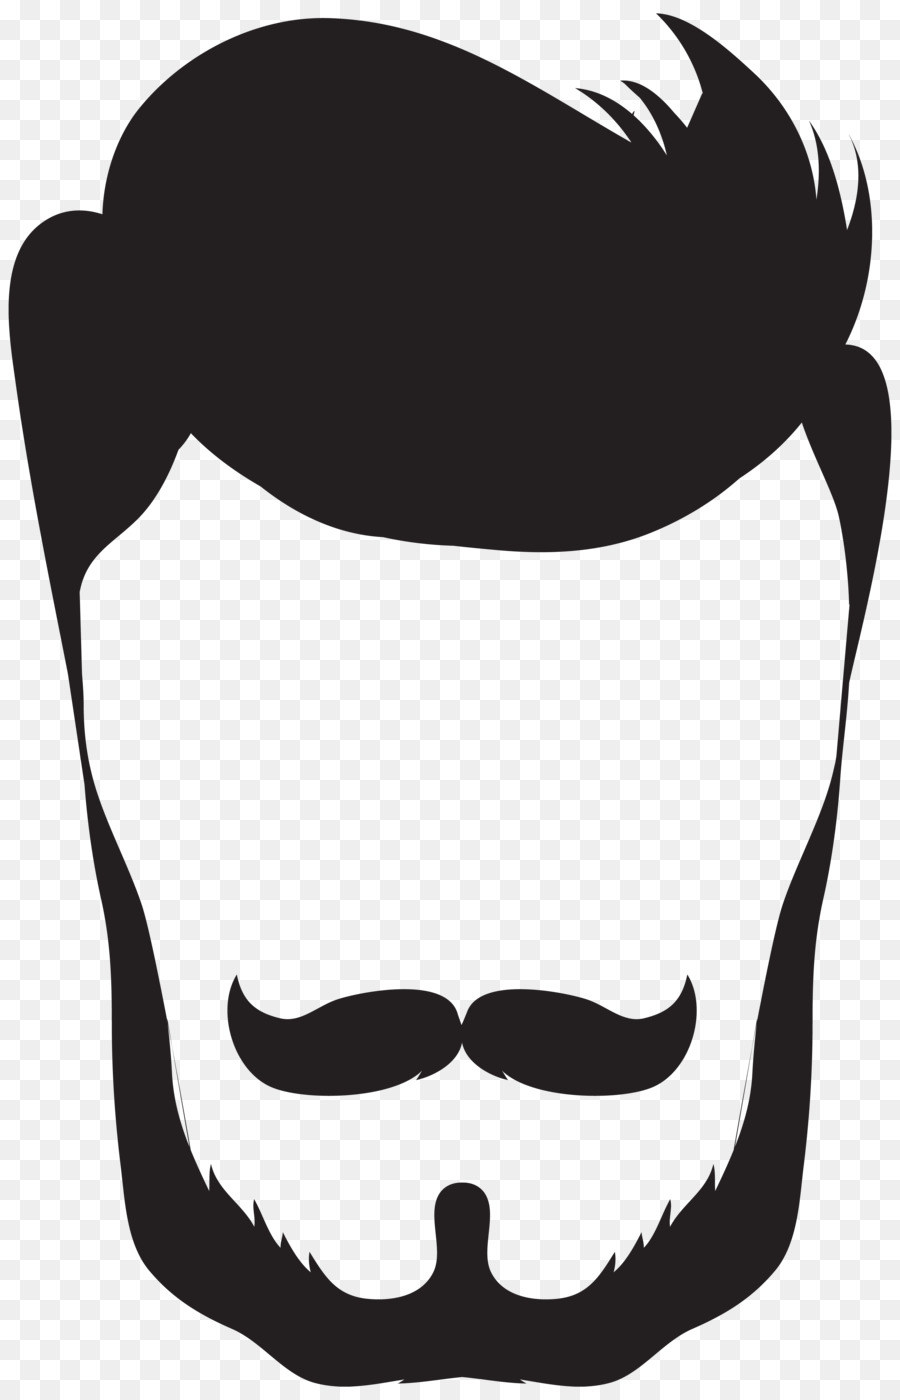 Beard Moustache Clip art - beard pictures png download - 5144*8000 - Free Transparent Beard png Download.